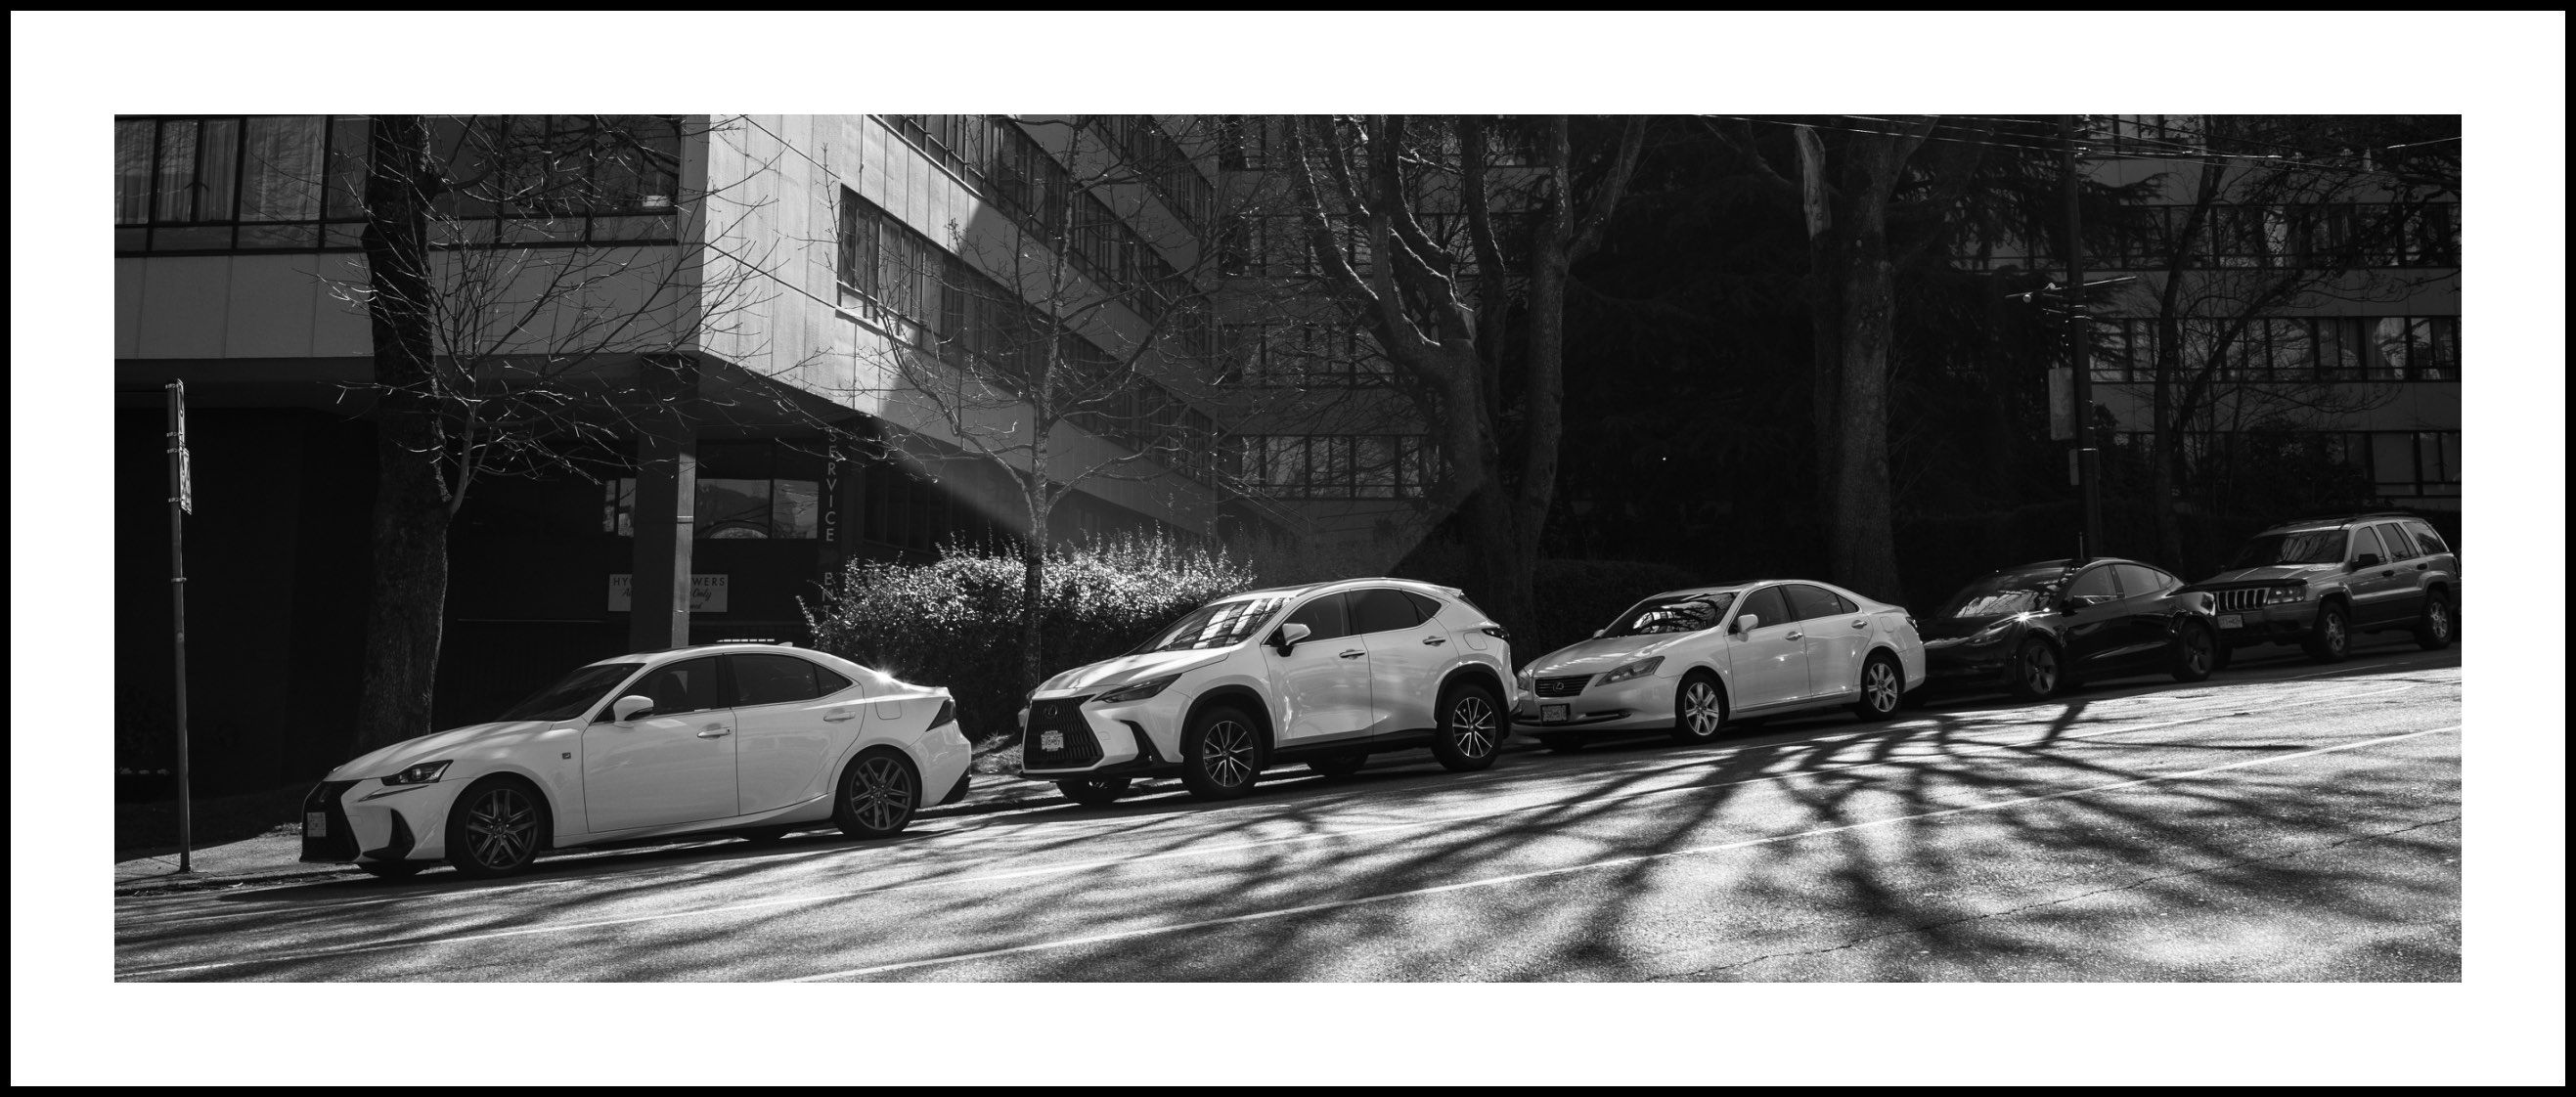 Downhill Parking - Leica M10, Voigtlander 35mm f2.5 Color Skopar